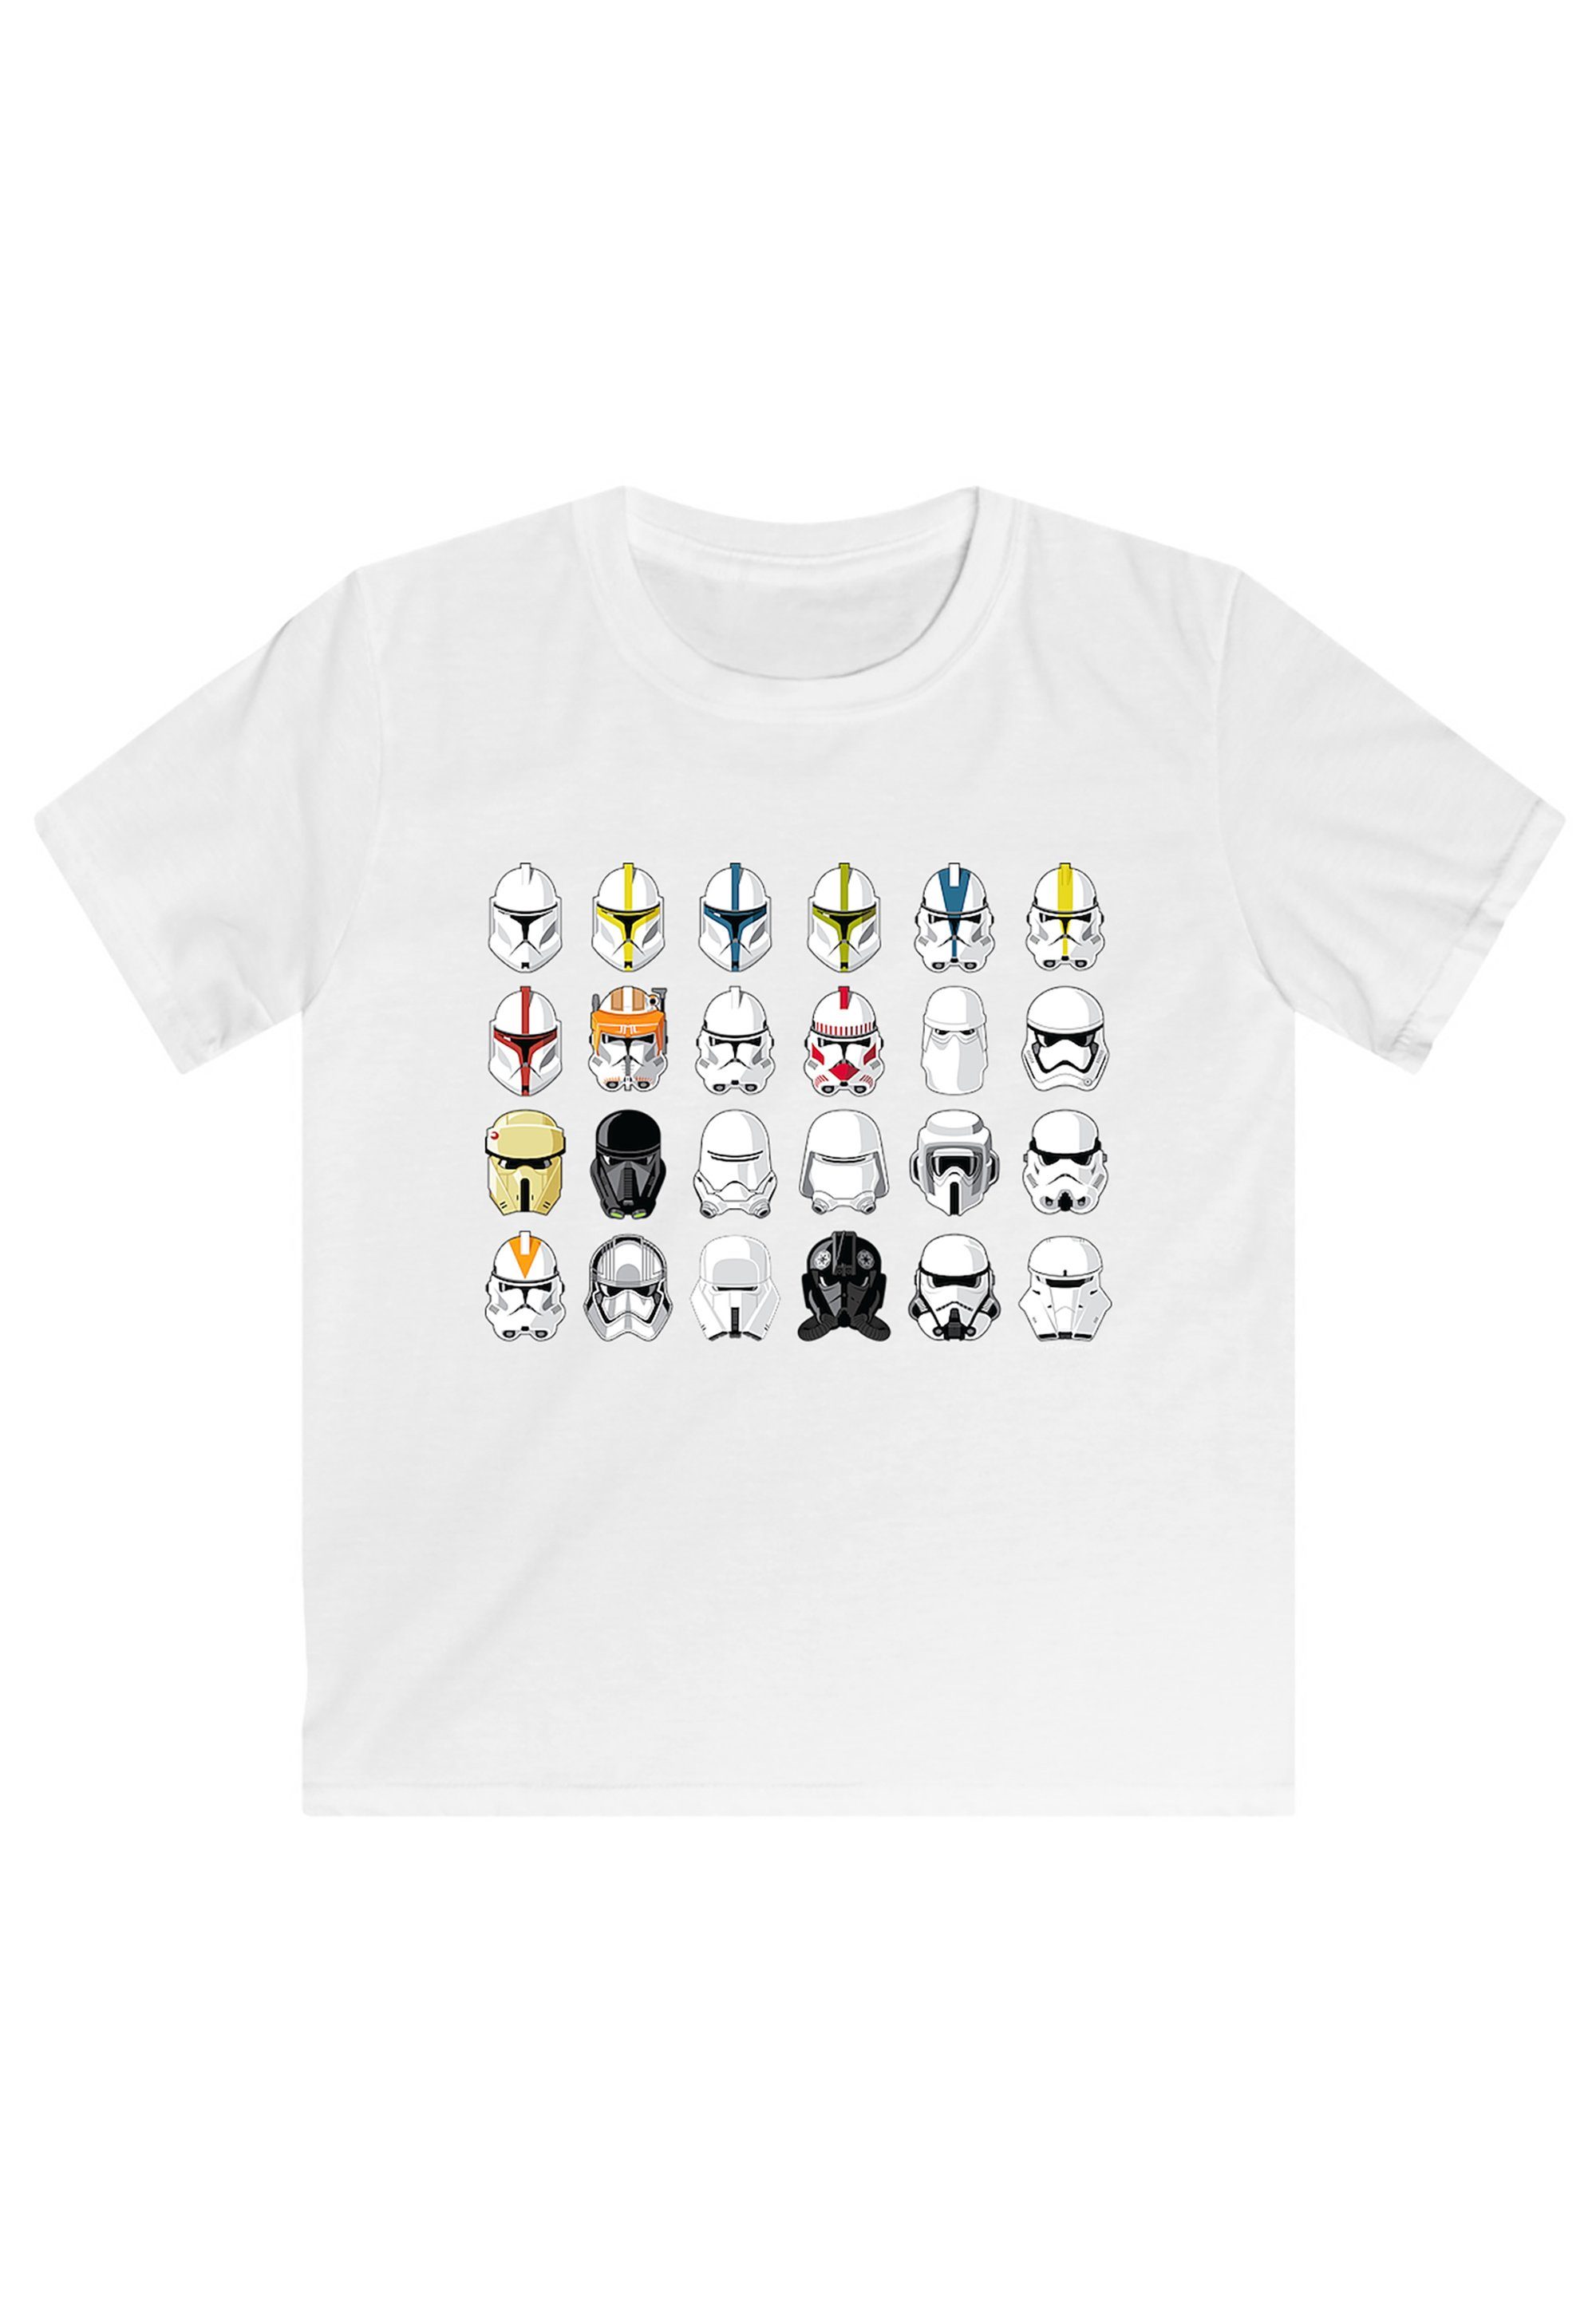 F4NT4STIC T-Shirt Krieg Wars der Helme weiß Print Piloten Sterne Stormtrooper Star